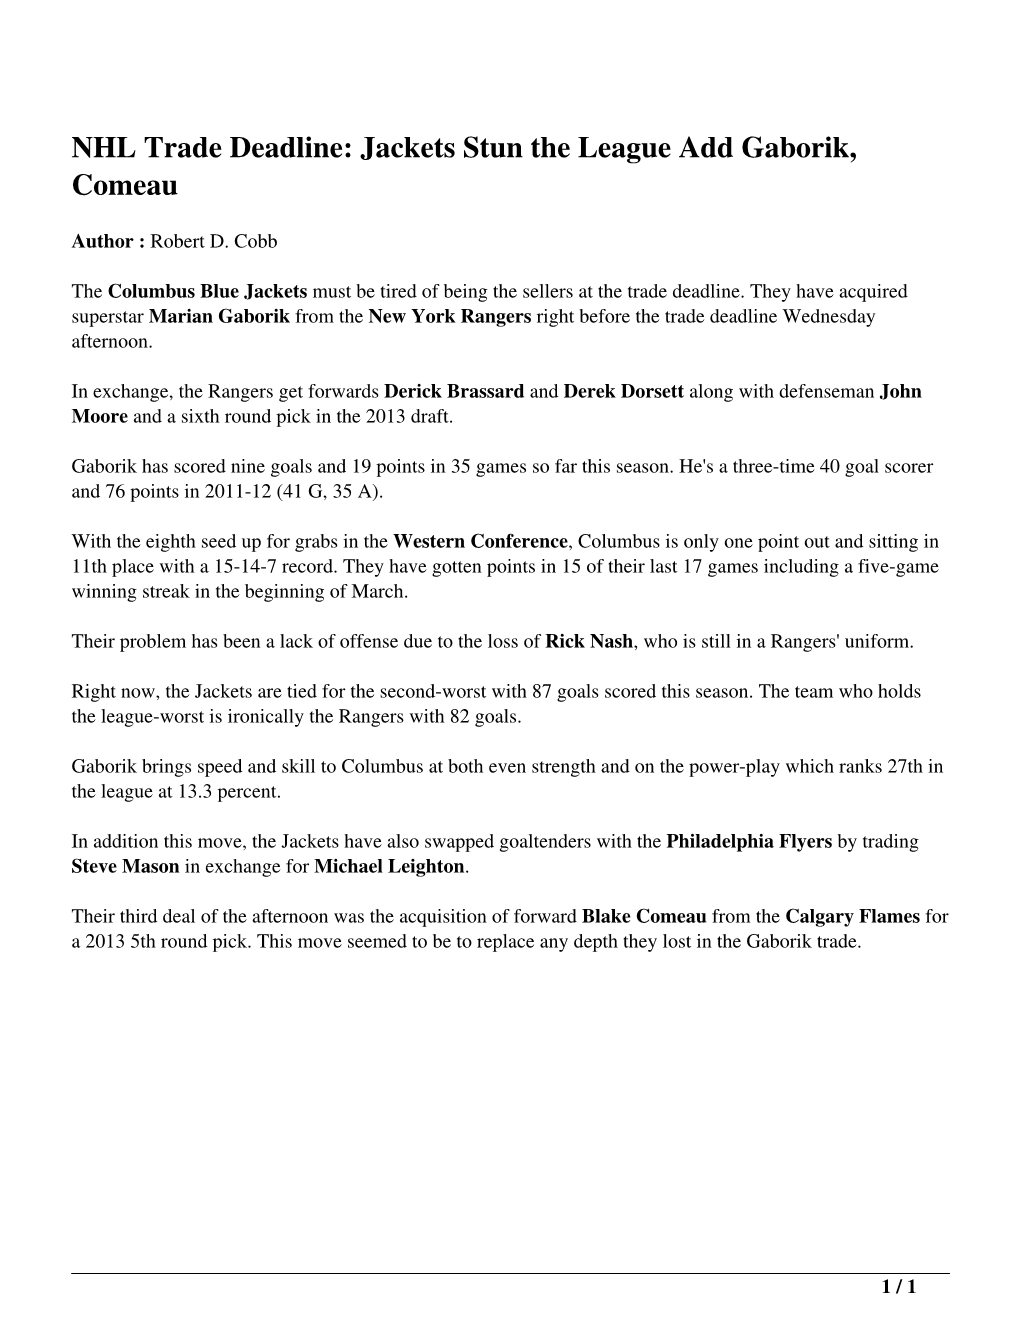 NHL Trade Deadline: Jackets Stun the League Add Gaborik, Comeau